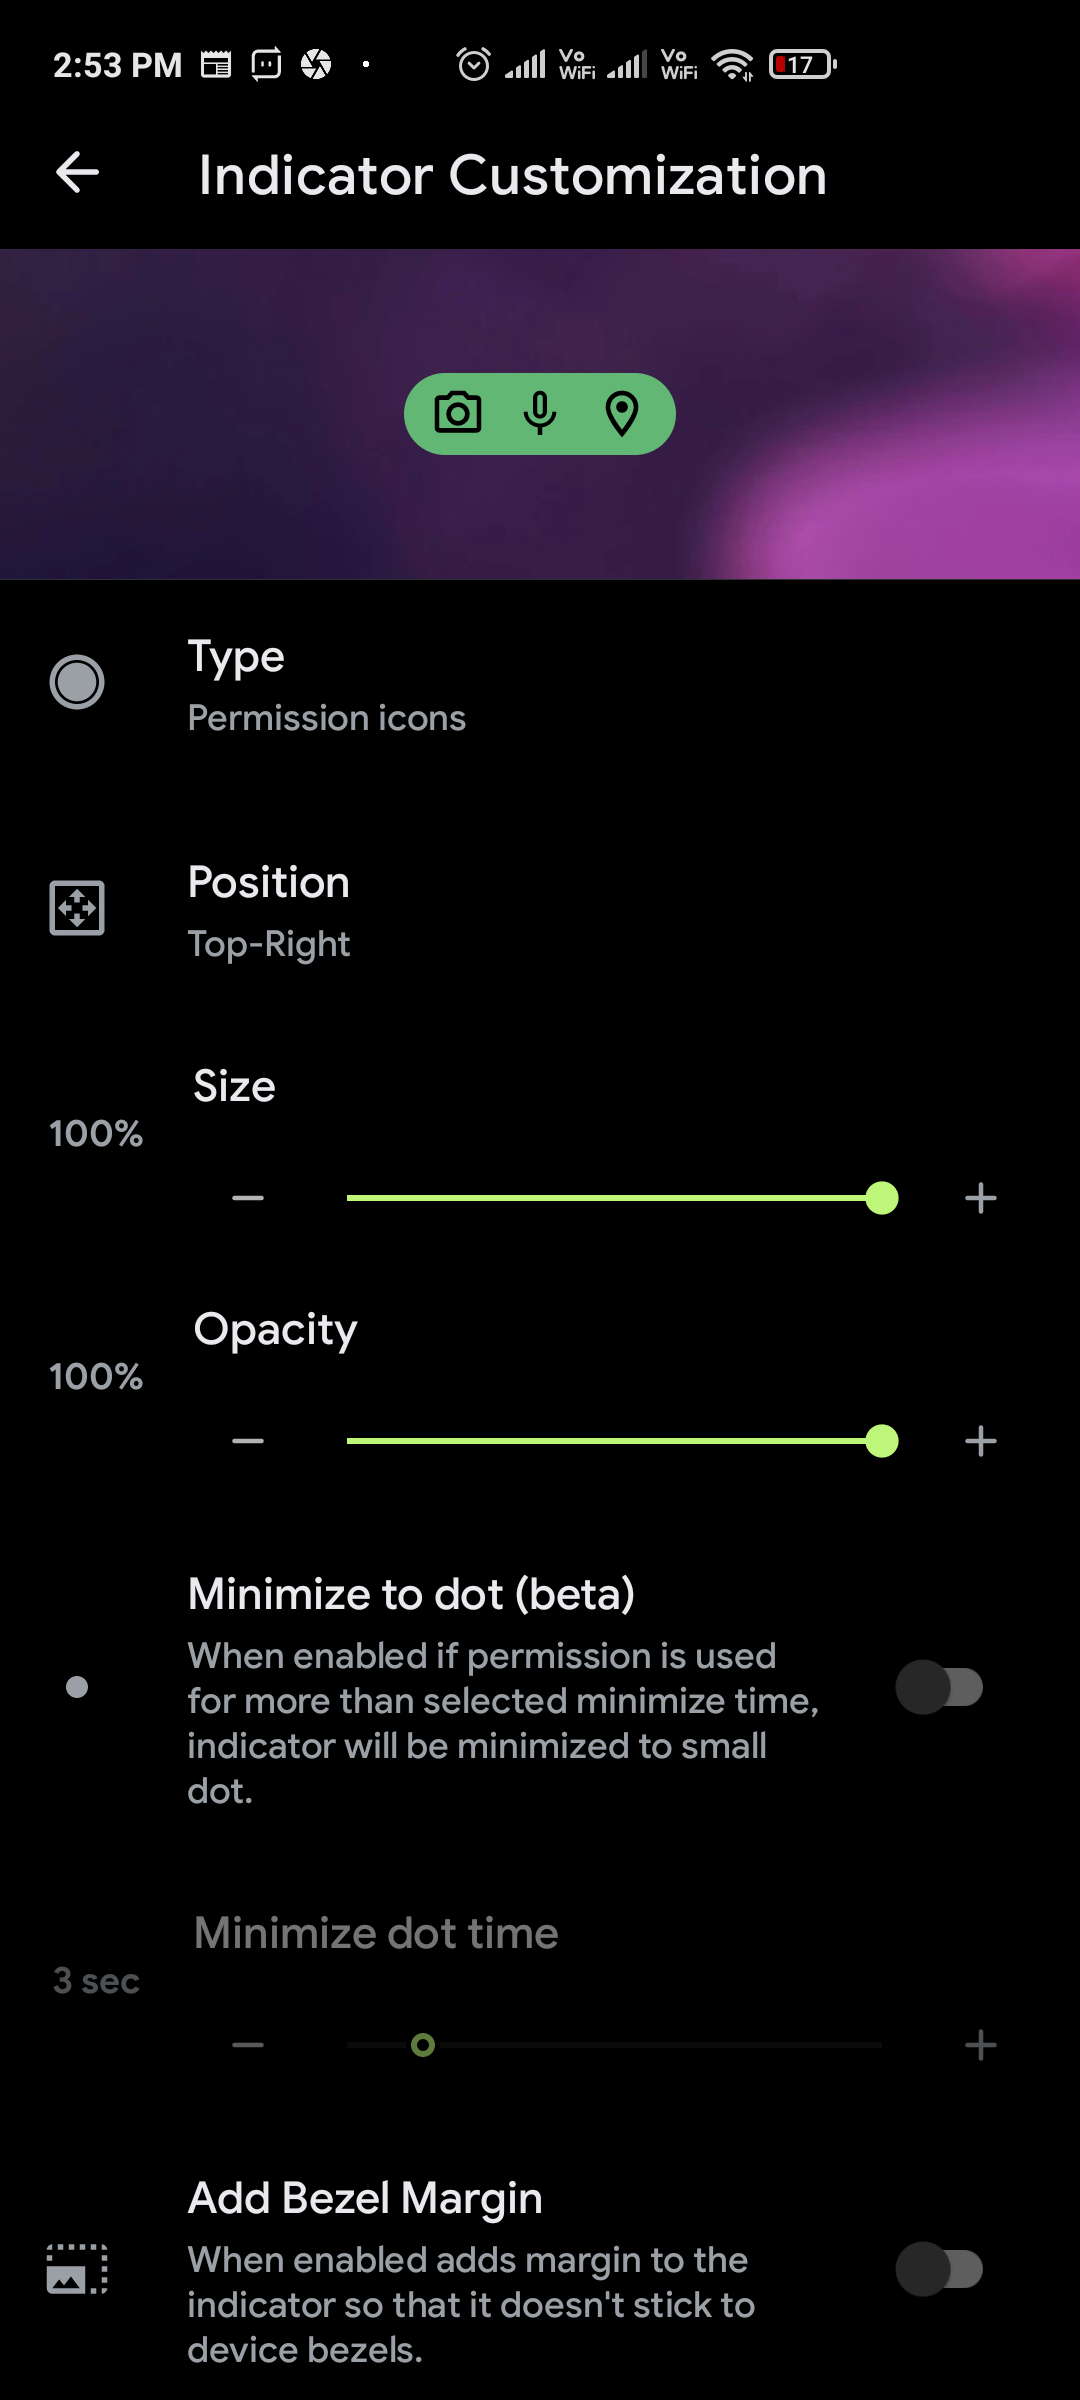 Indicator customization settings in Privacy Dashboard app